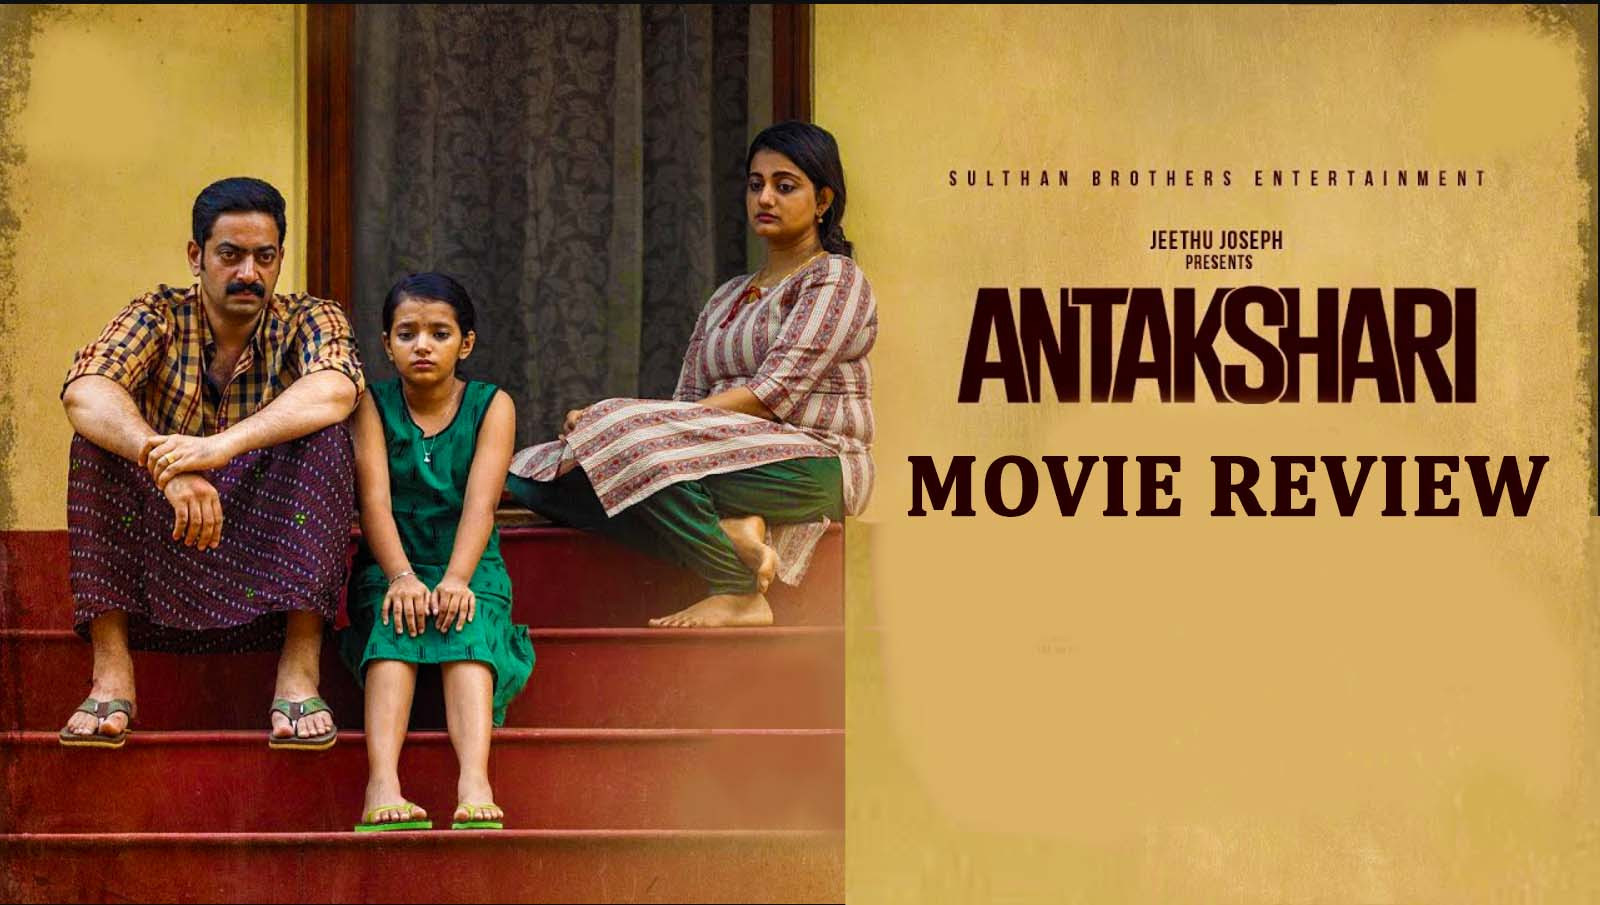 Antakshari Movie Review in English